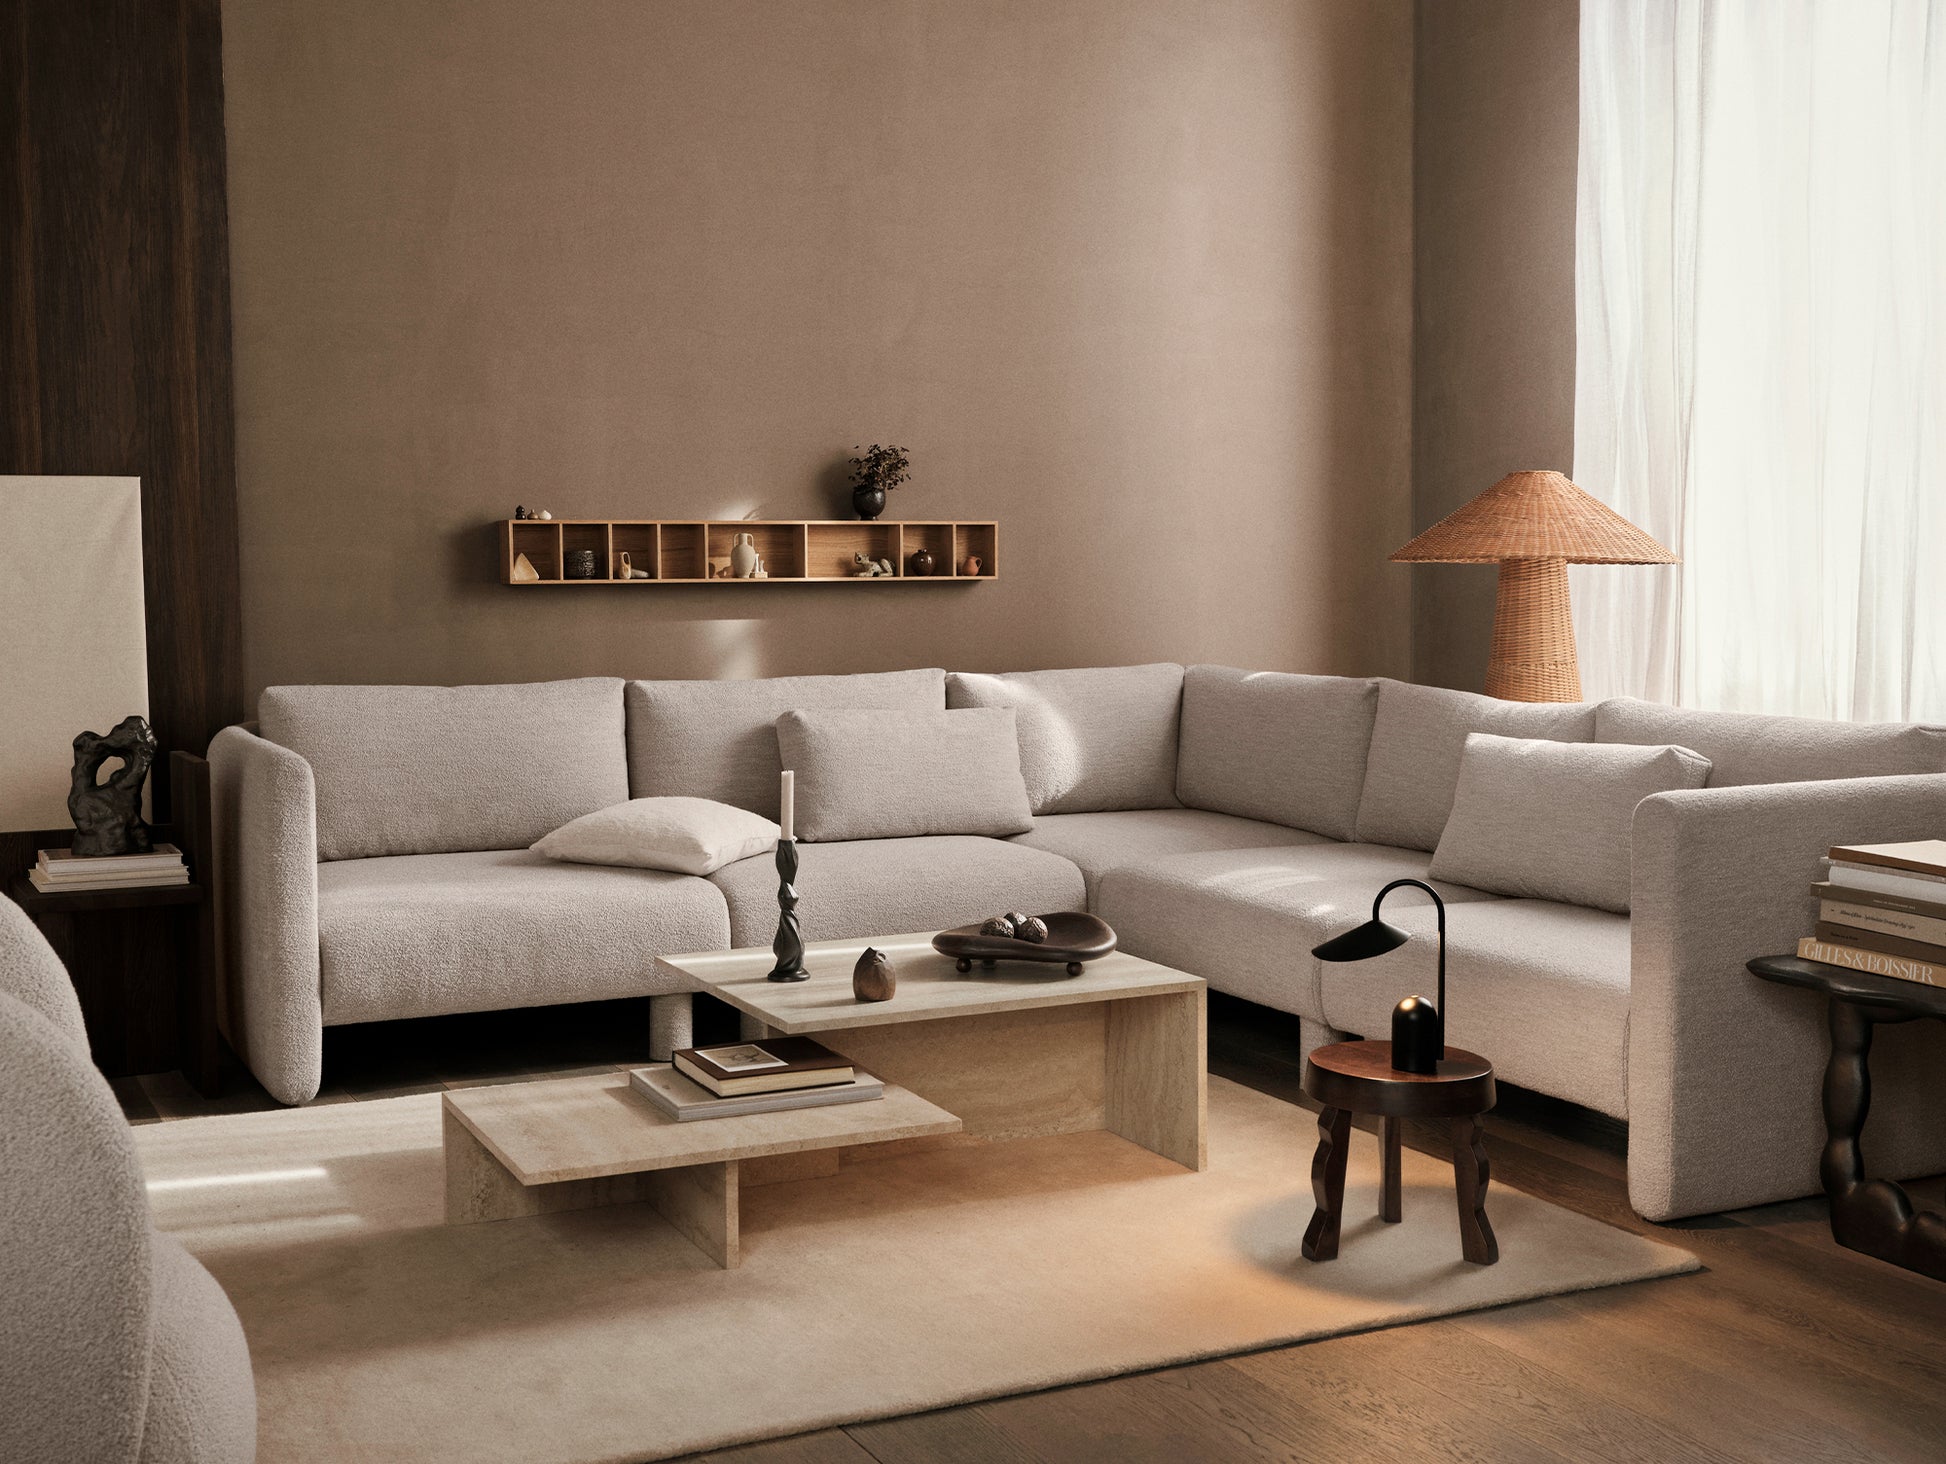 Dase Modular Sofa - Individual Modules by Ferm Living - Soft Boucle